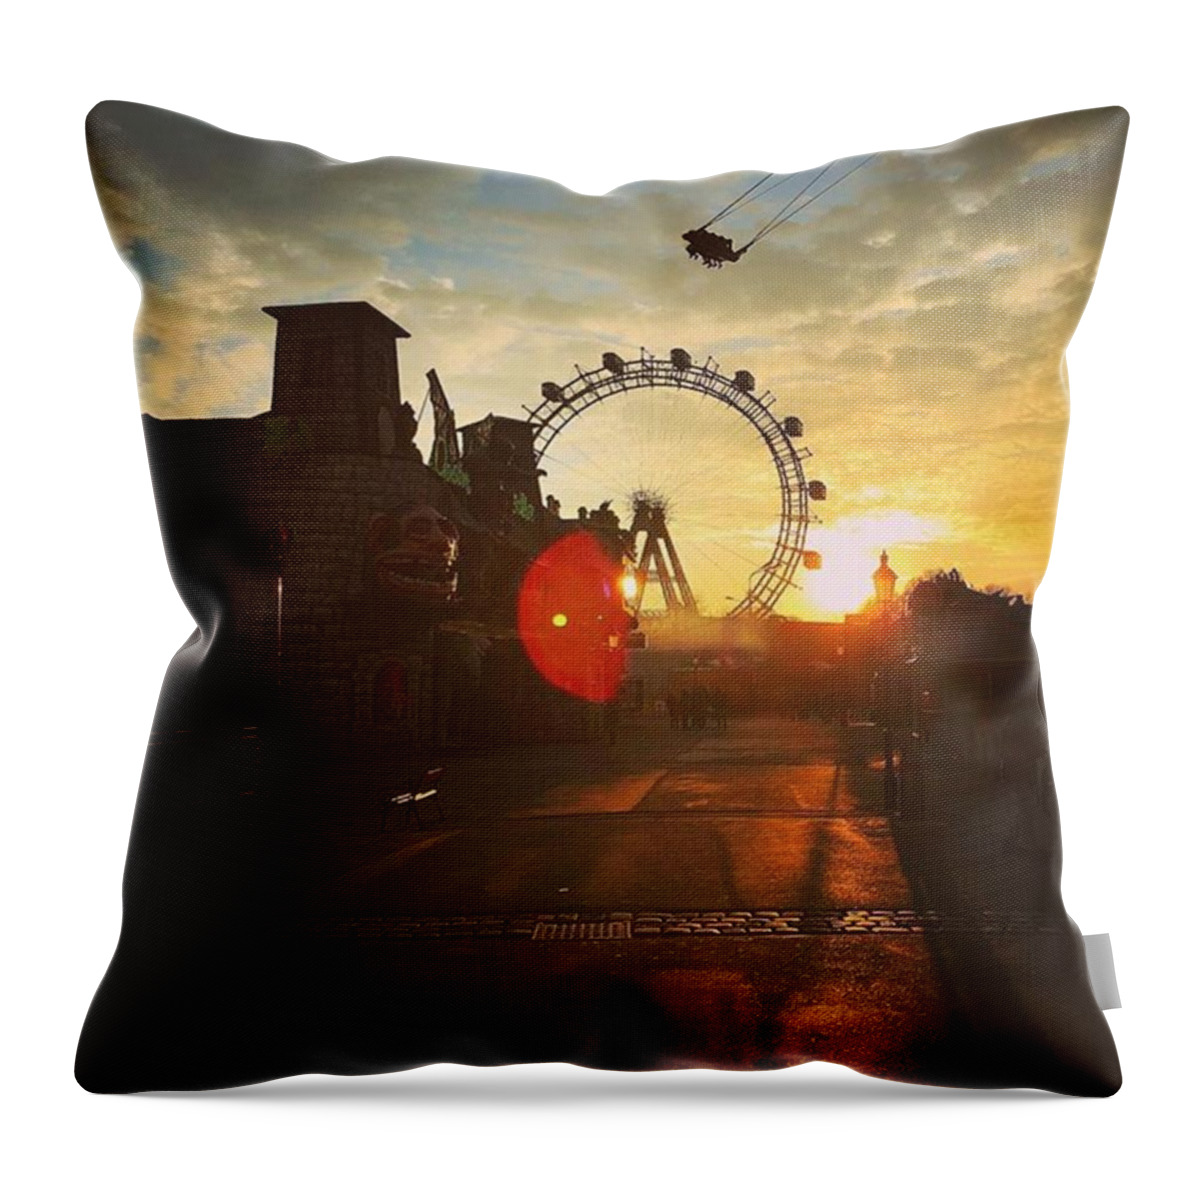 Beautiful Throw Pillow featuring the photograph #sunset #sunsetlovers #sunrise #horizon by Danijel Ilic